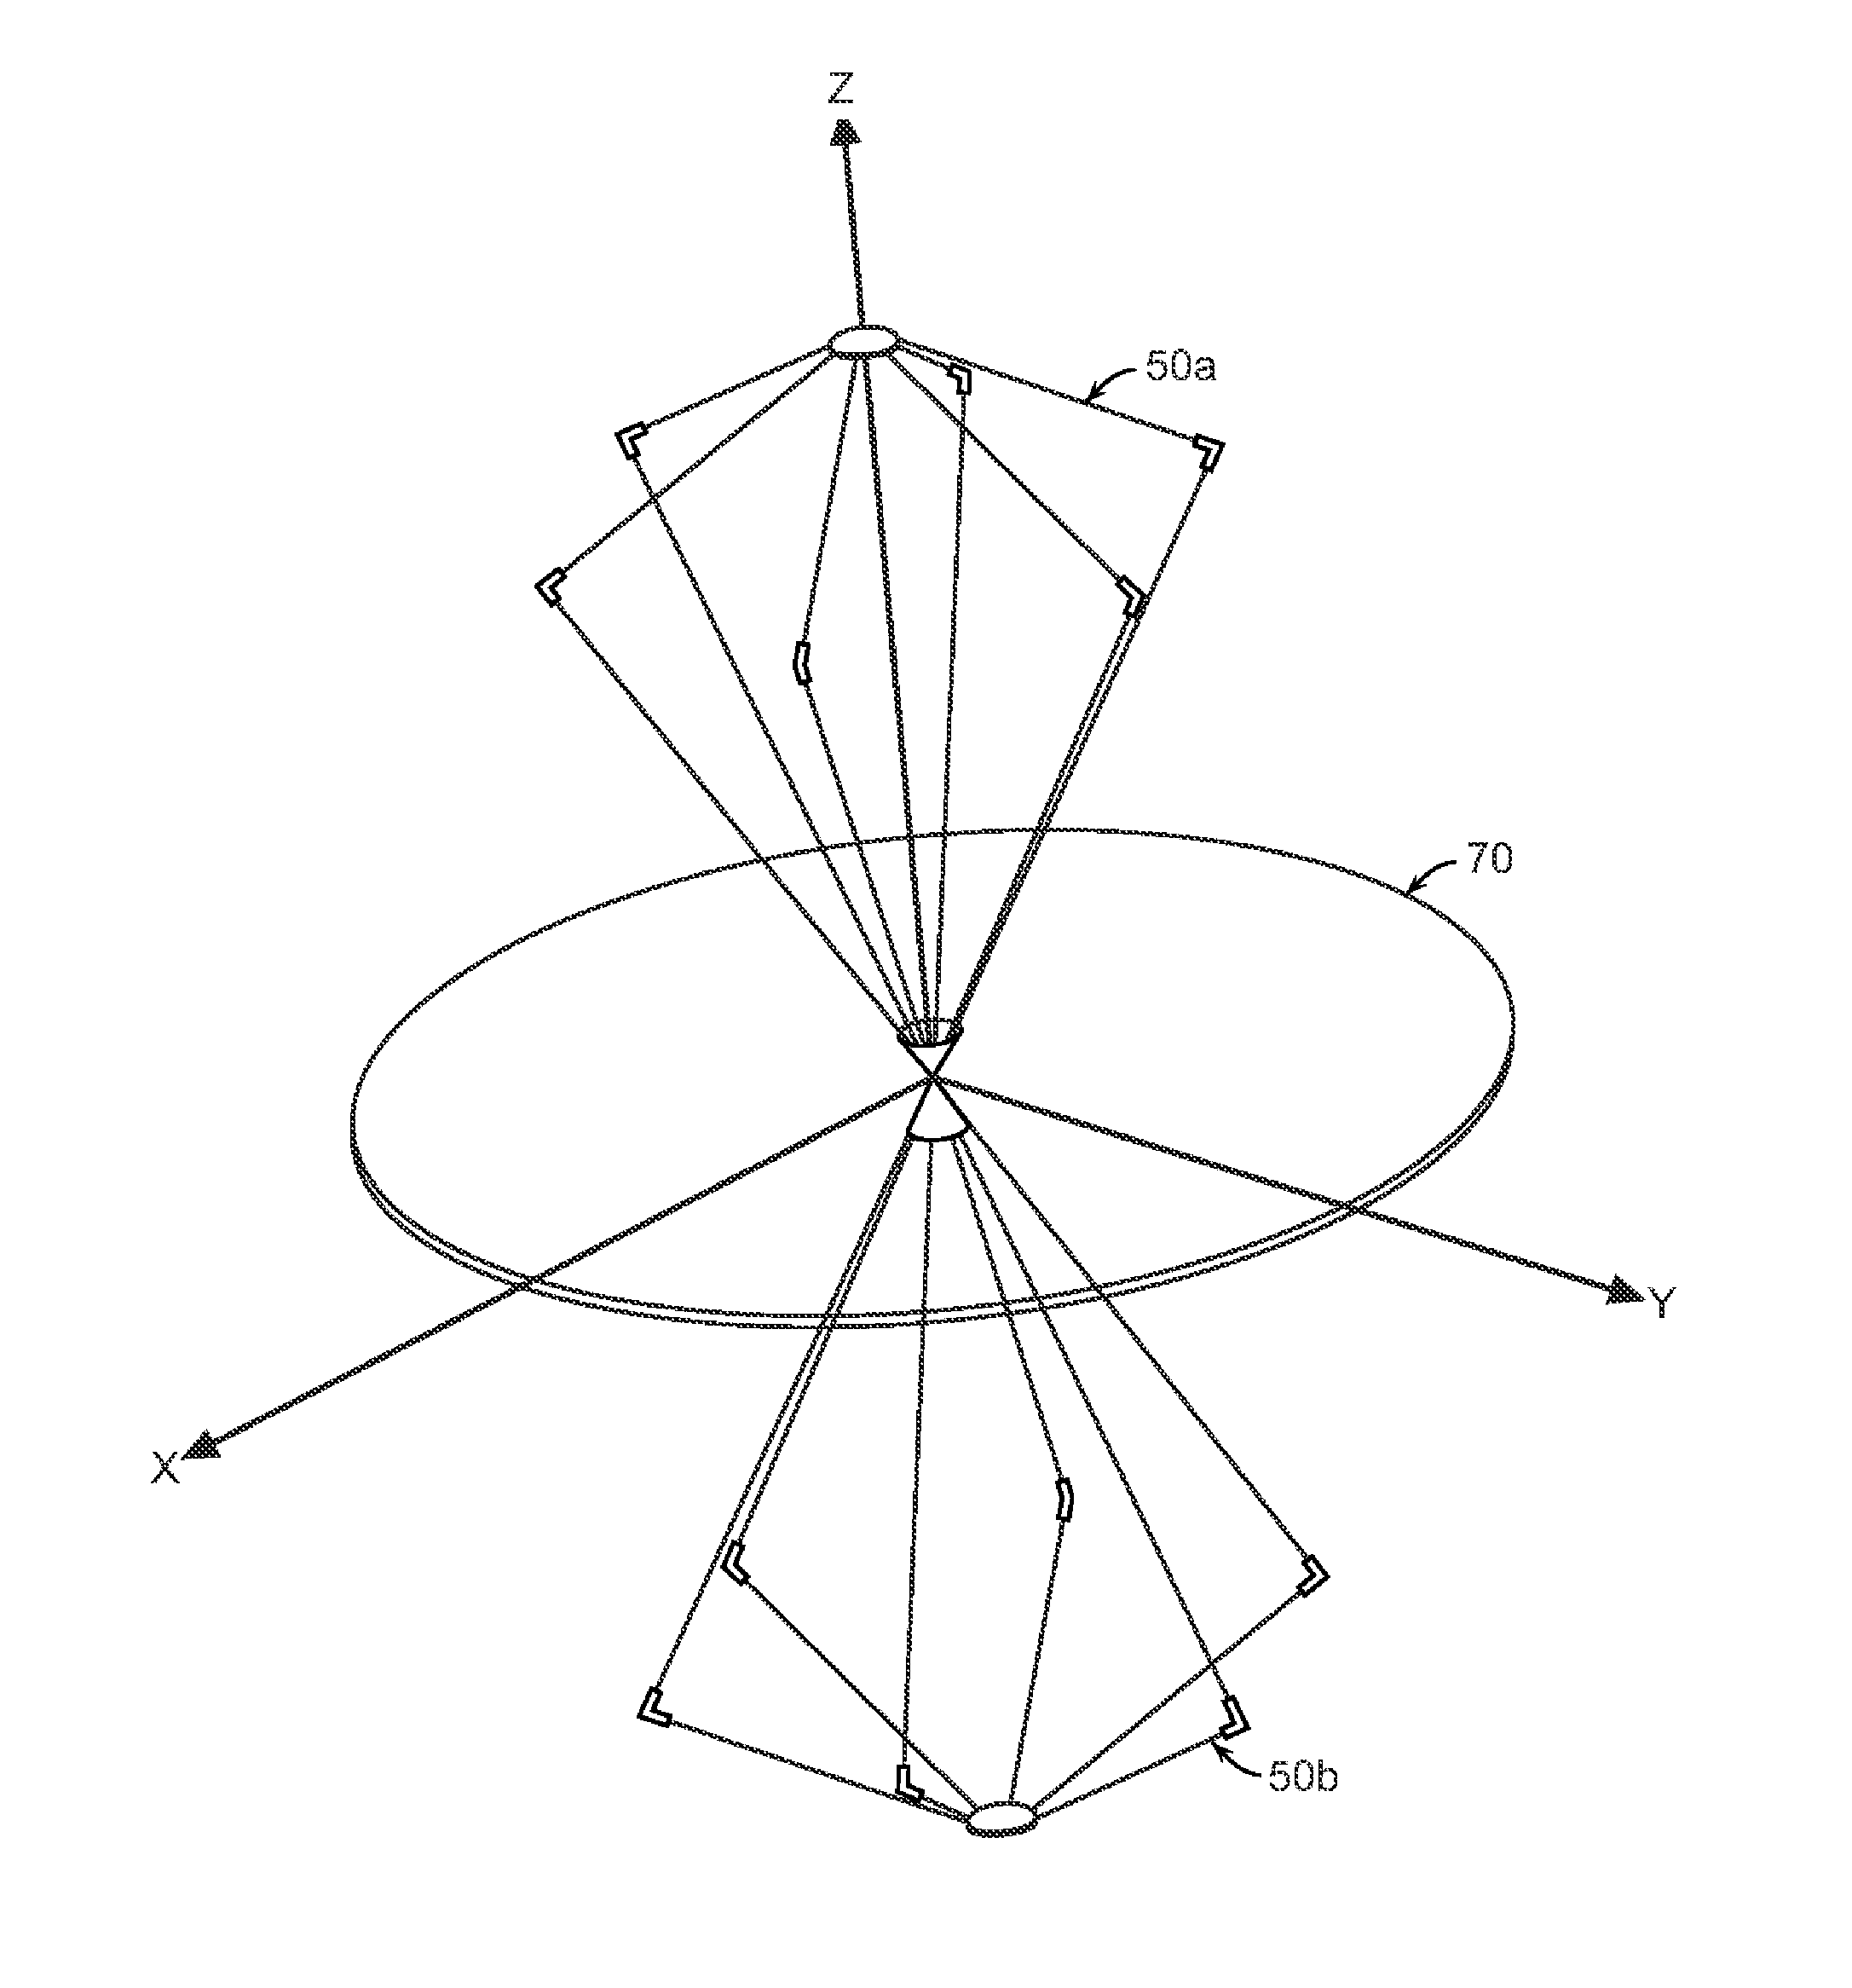 Biconical antenna with equal delay balun and bifurcating ground plane